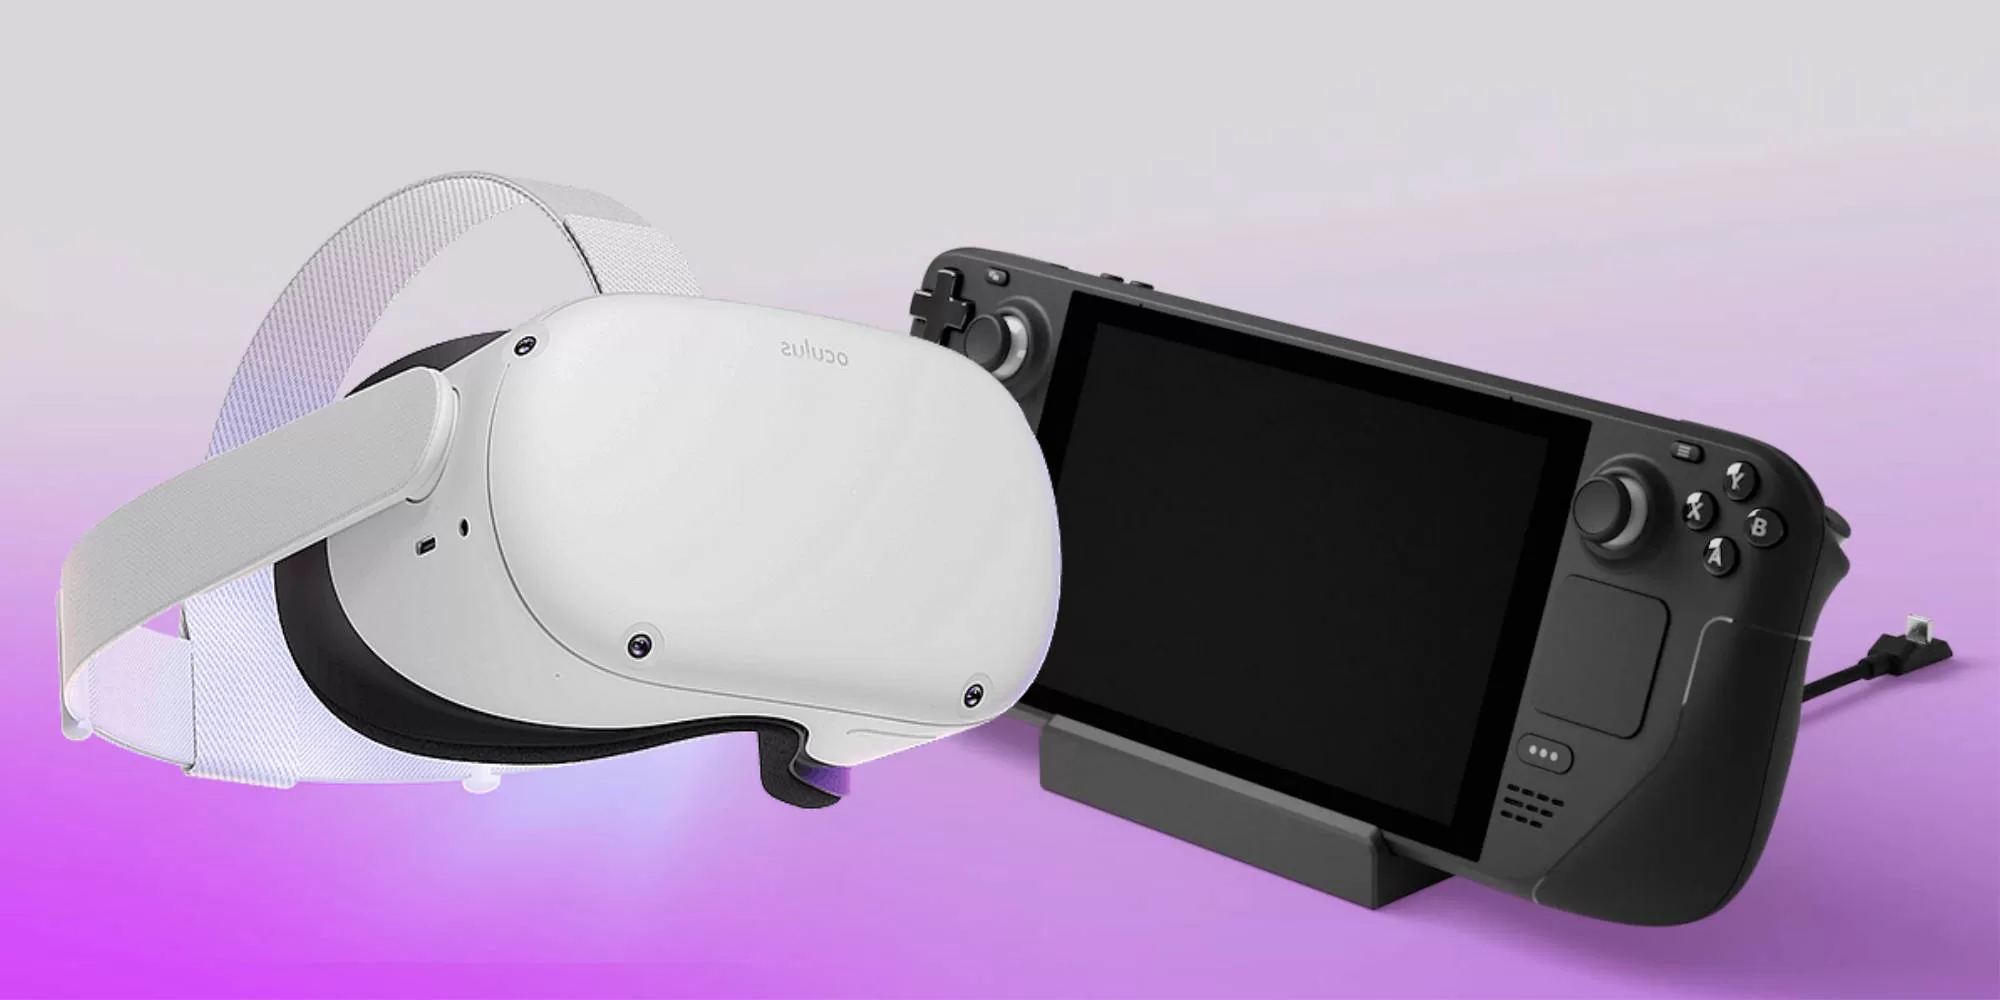 Tutorial: Steam Deck VR with Meta Quest 2